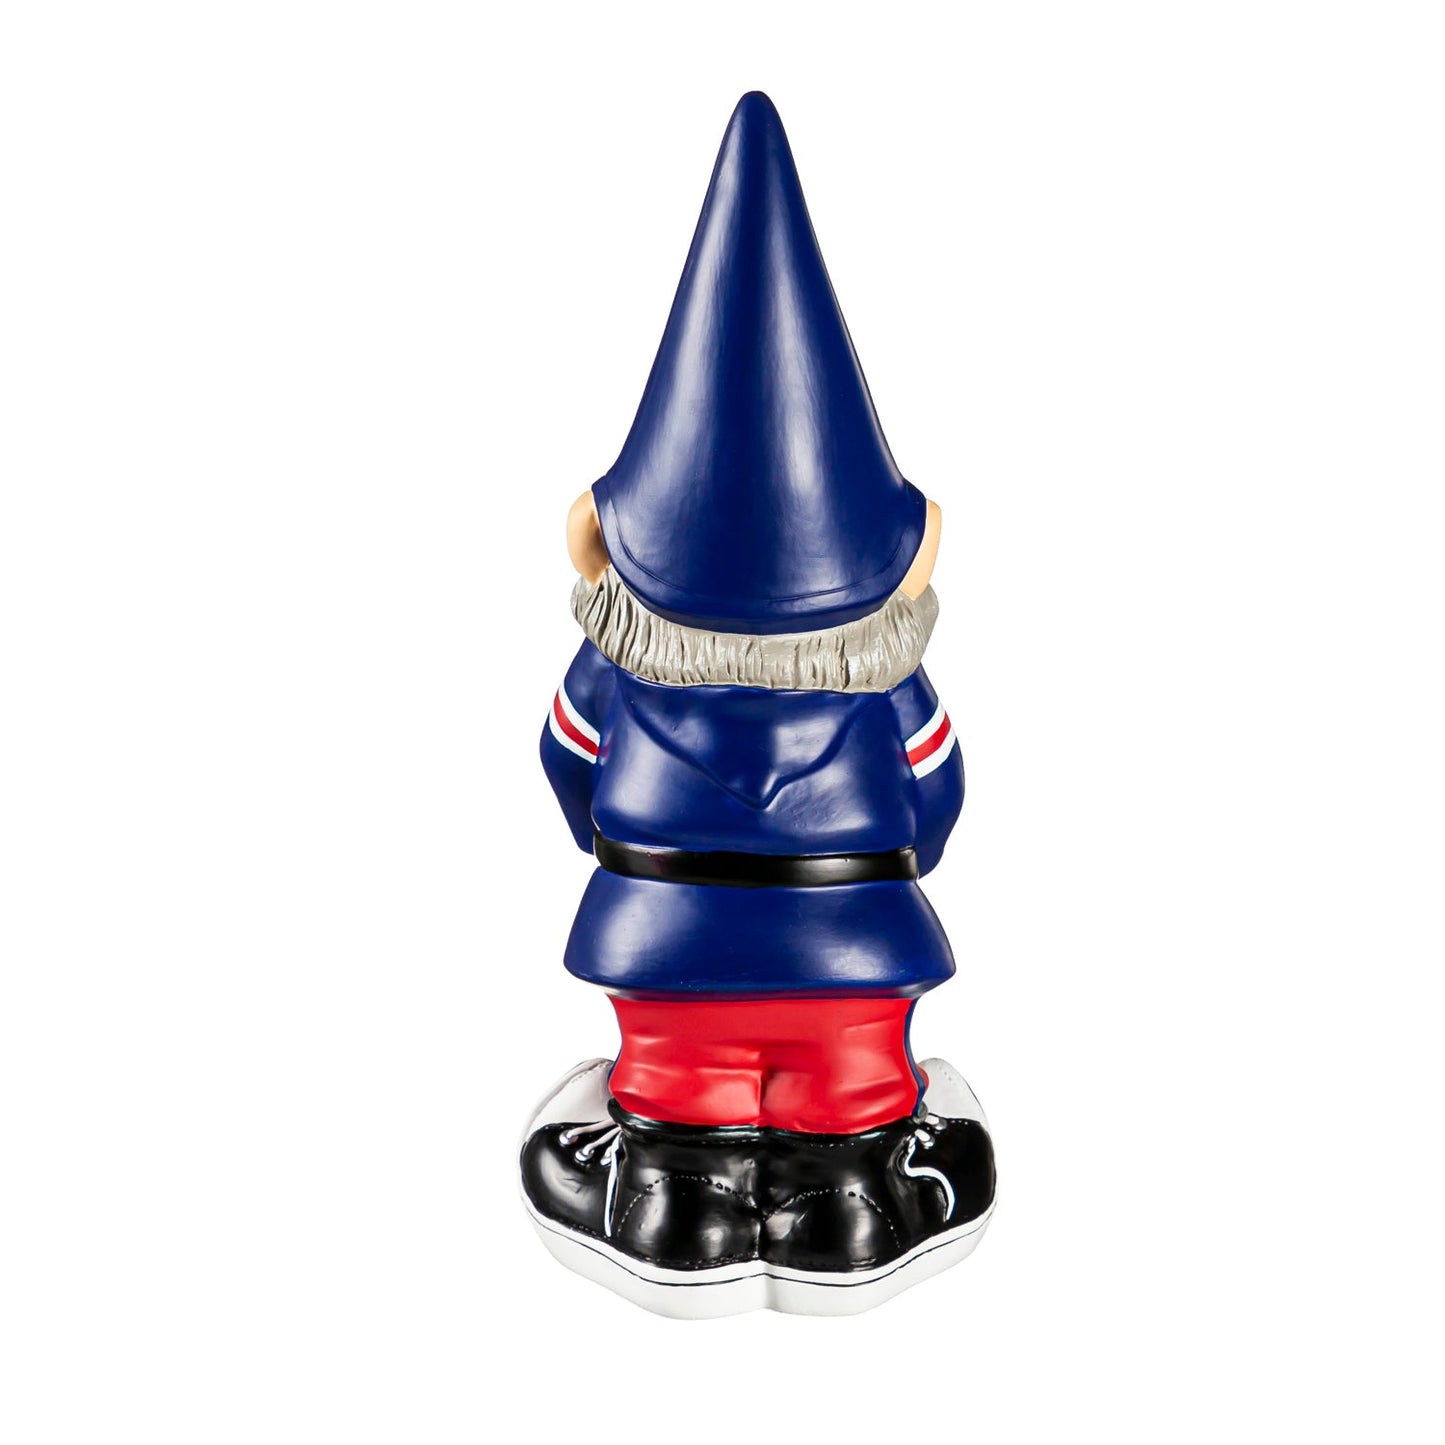 New York Giants Garden Gnome, 11"